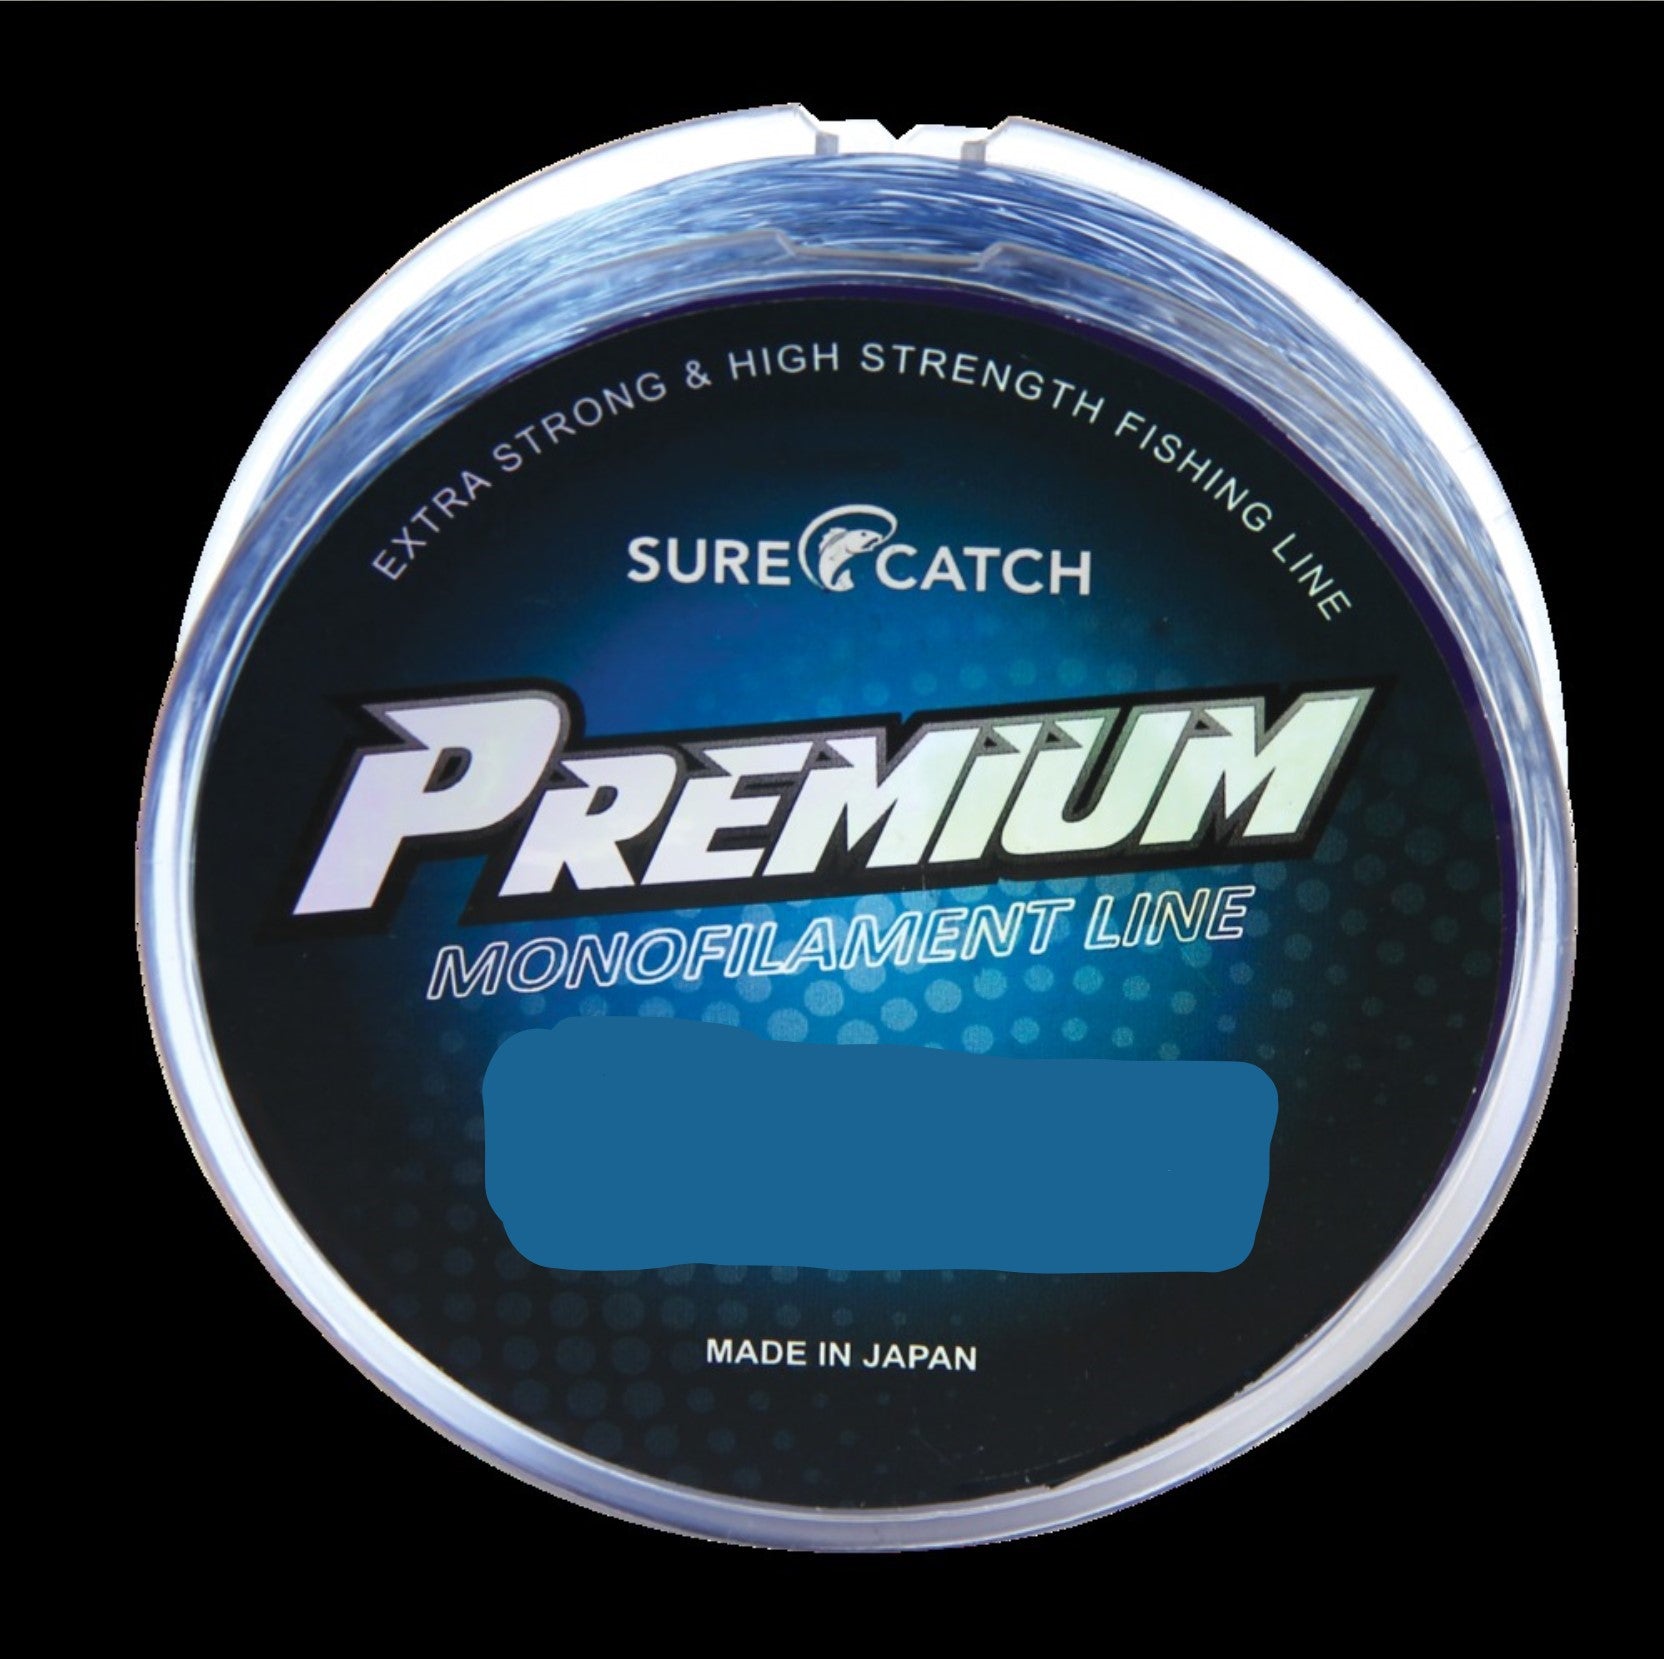 SureCatch Premium Monofilament Line – Trophy Trout Lures and Fly